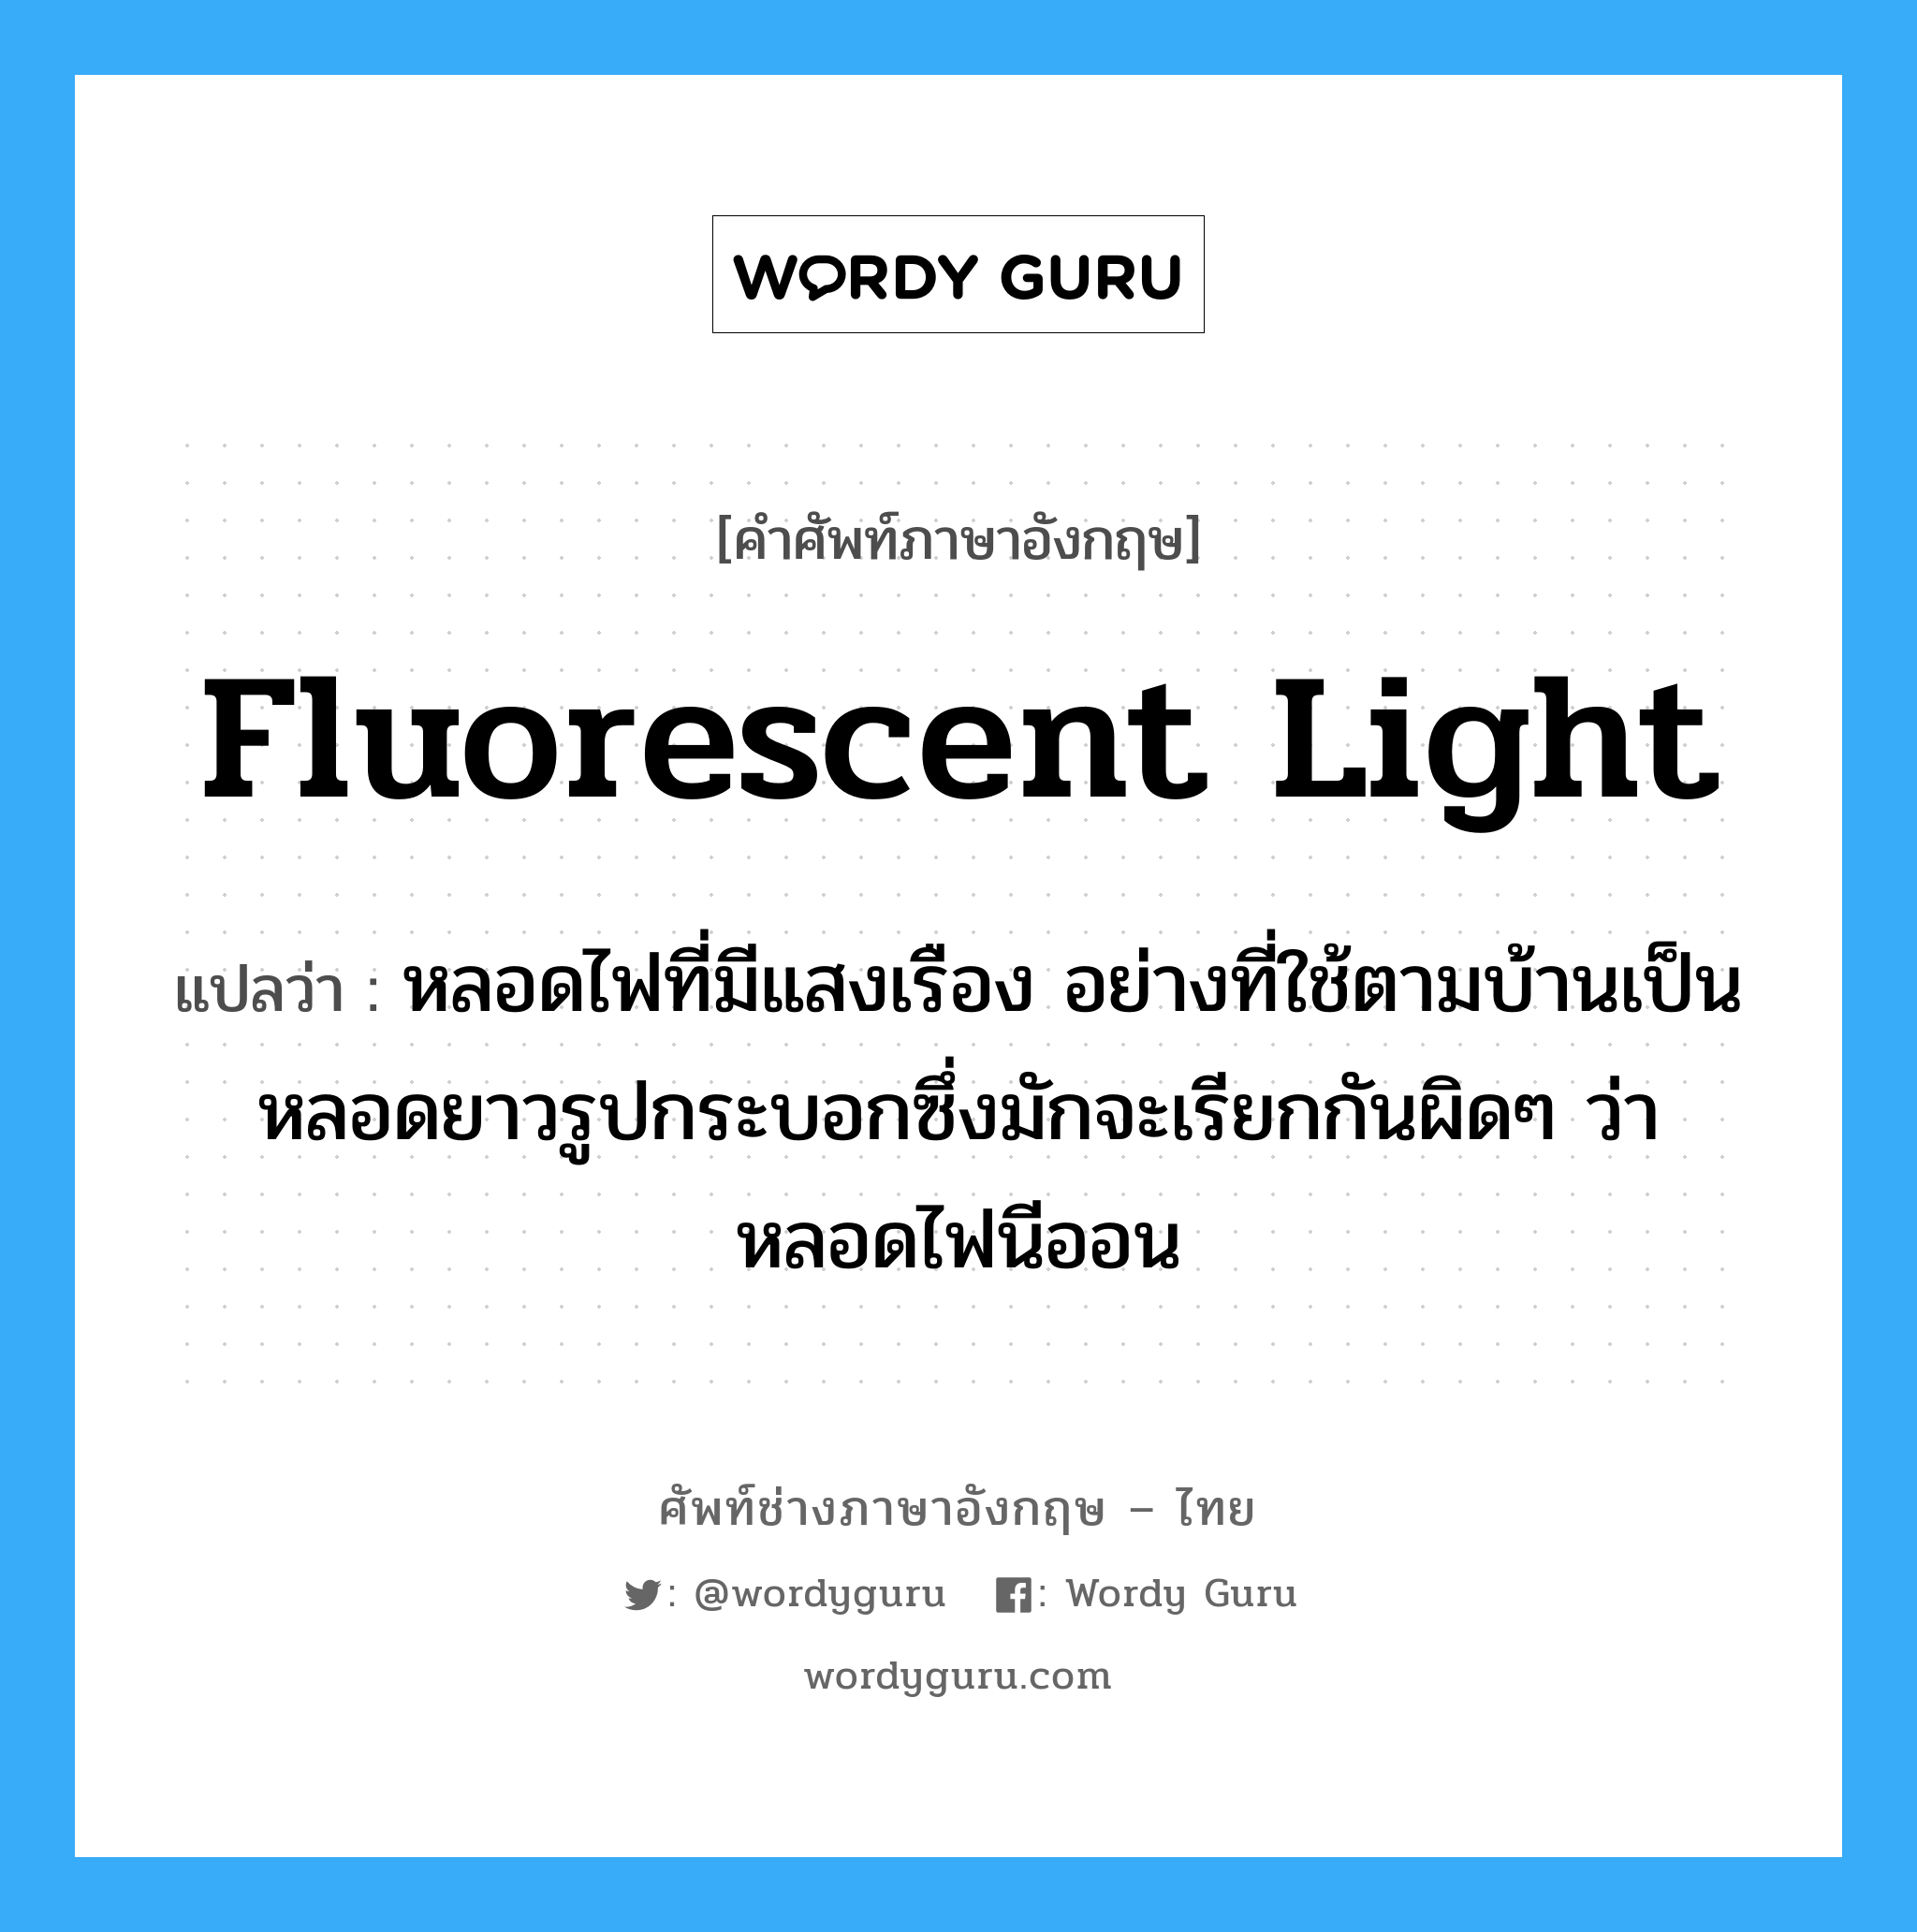 fluorescent light แปลว่า?, คำศัพท์ช่างภาษาอังกฤษ - ไทย fluorescent light คำศัพท์ภาษาอังกฤษ fluorescent light แปลว่า หลอดไฟที่มีแสงเรือง อย่างที่ใช้ตามบ้านเป็นหลอดยาวรูปกระบอกซึ่งมักจะเรียกกันผิดๆ ว่าหลอดไฟนีออน